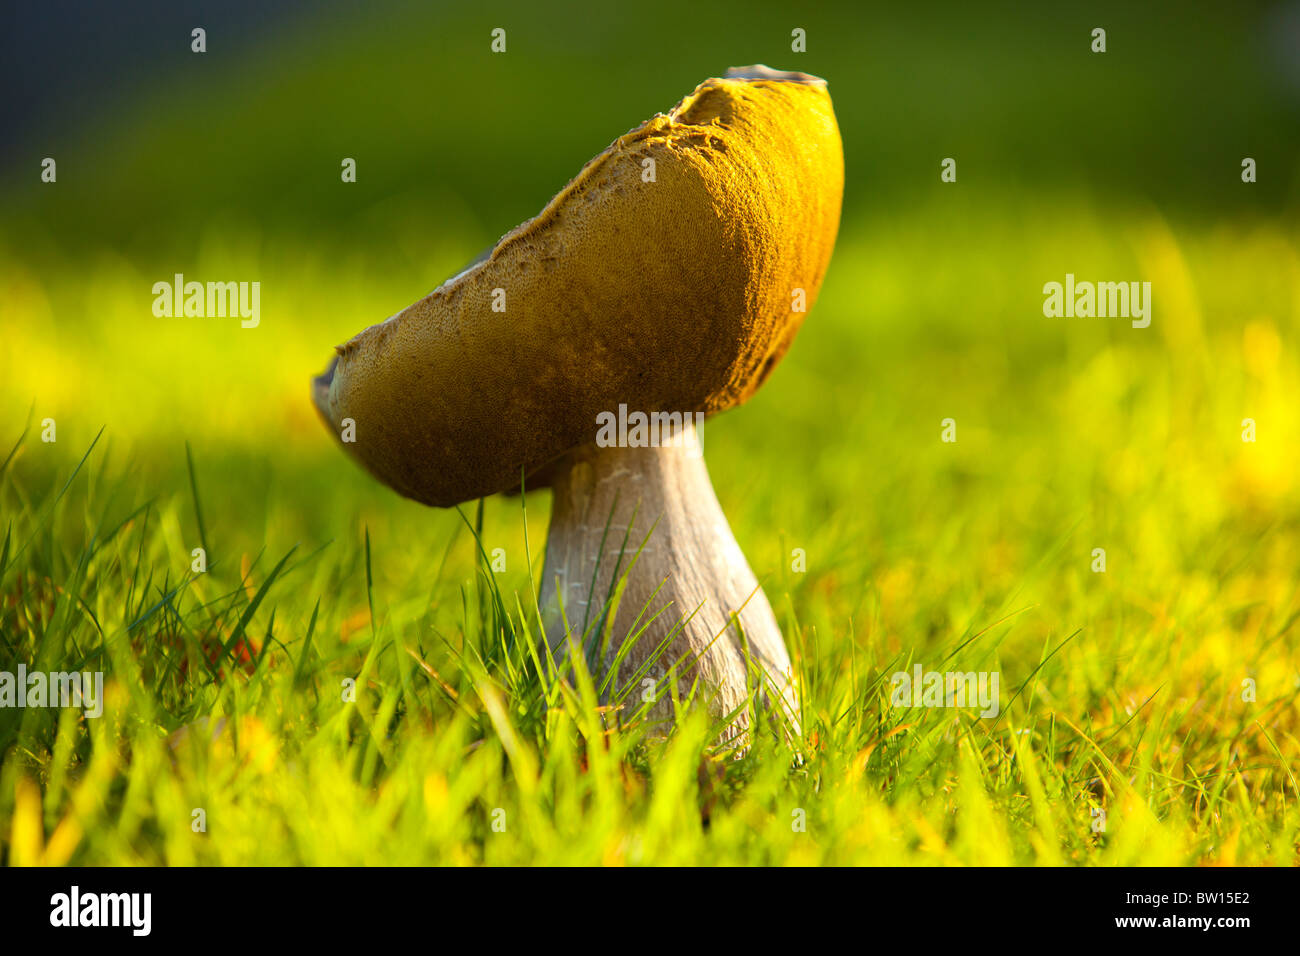 A Boletus funghi in Autumn at Holehird Gardens, Windermere, UK. Stock Photo